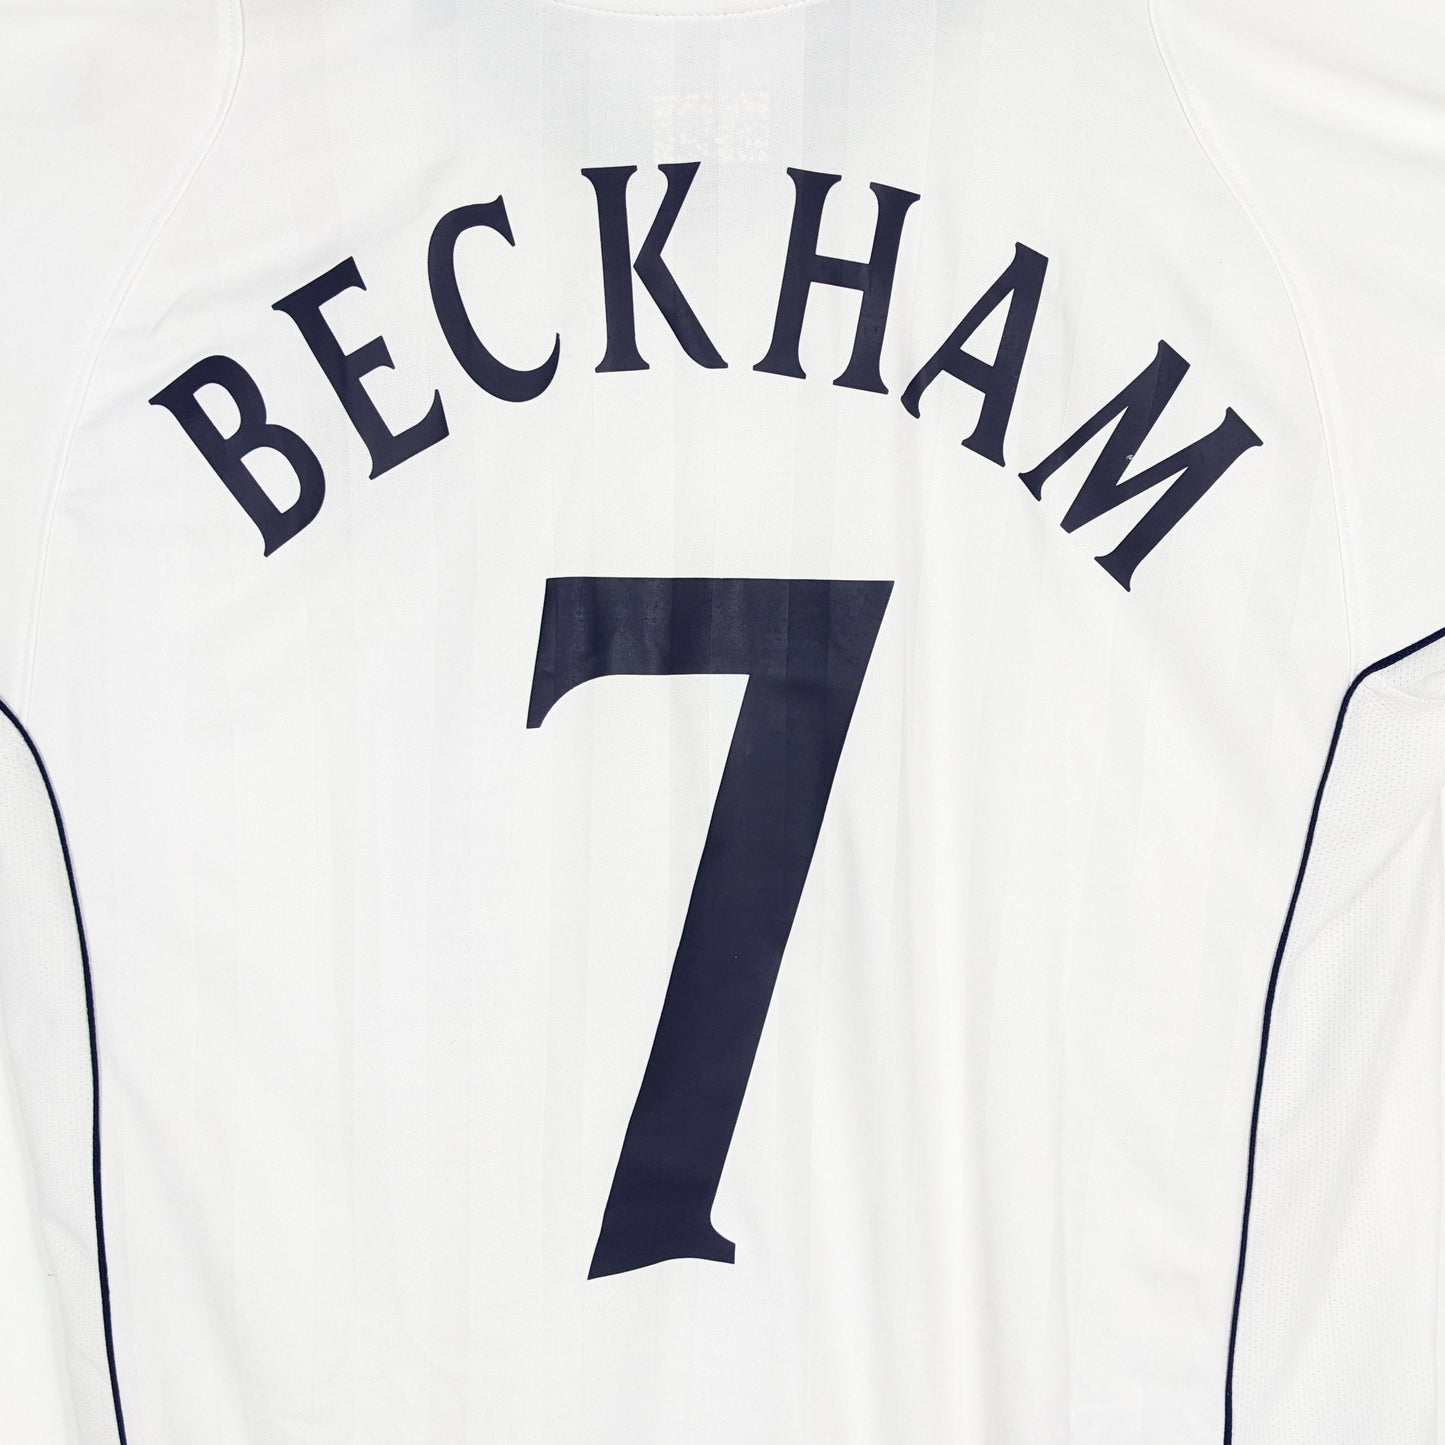 Authentic England 2002 Home Long Sleeve - Beckham #7 Size XL